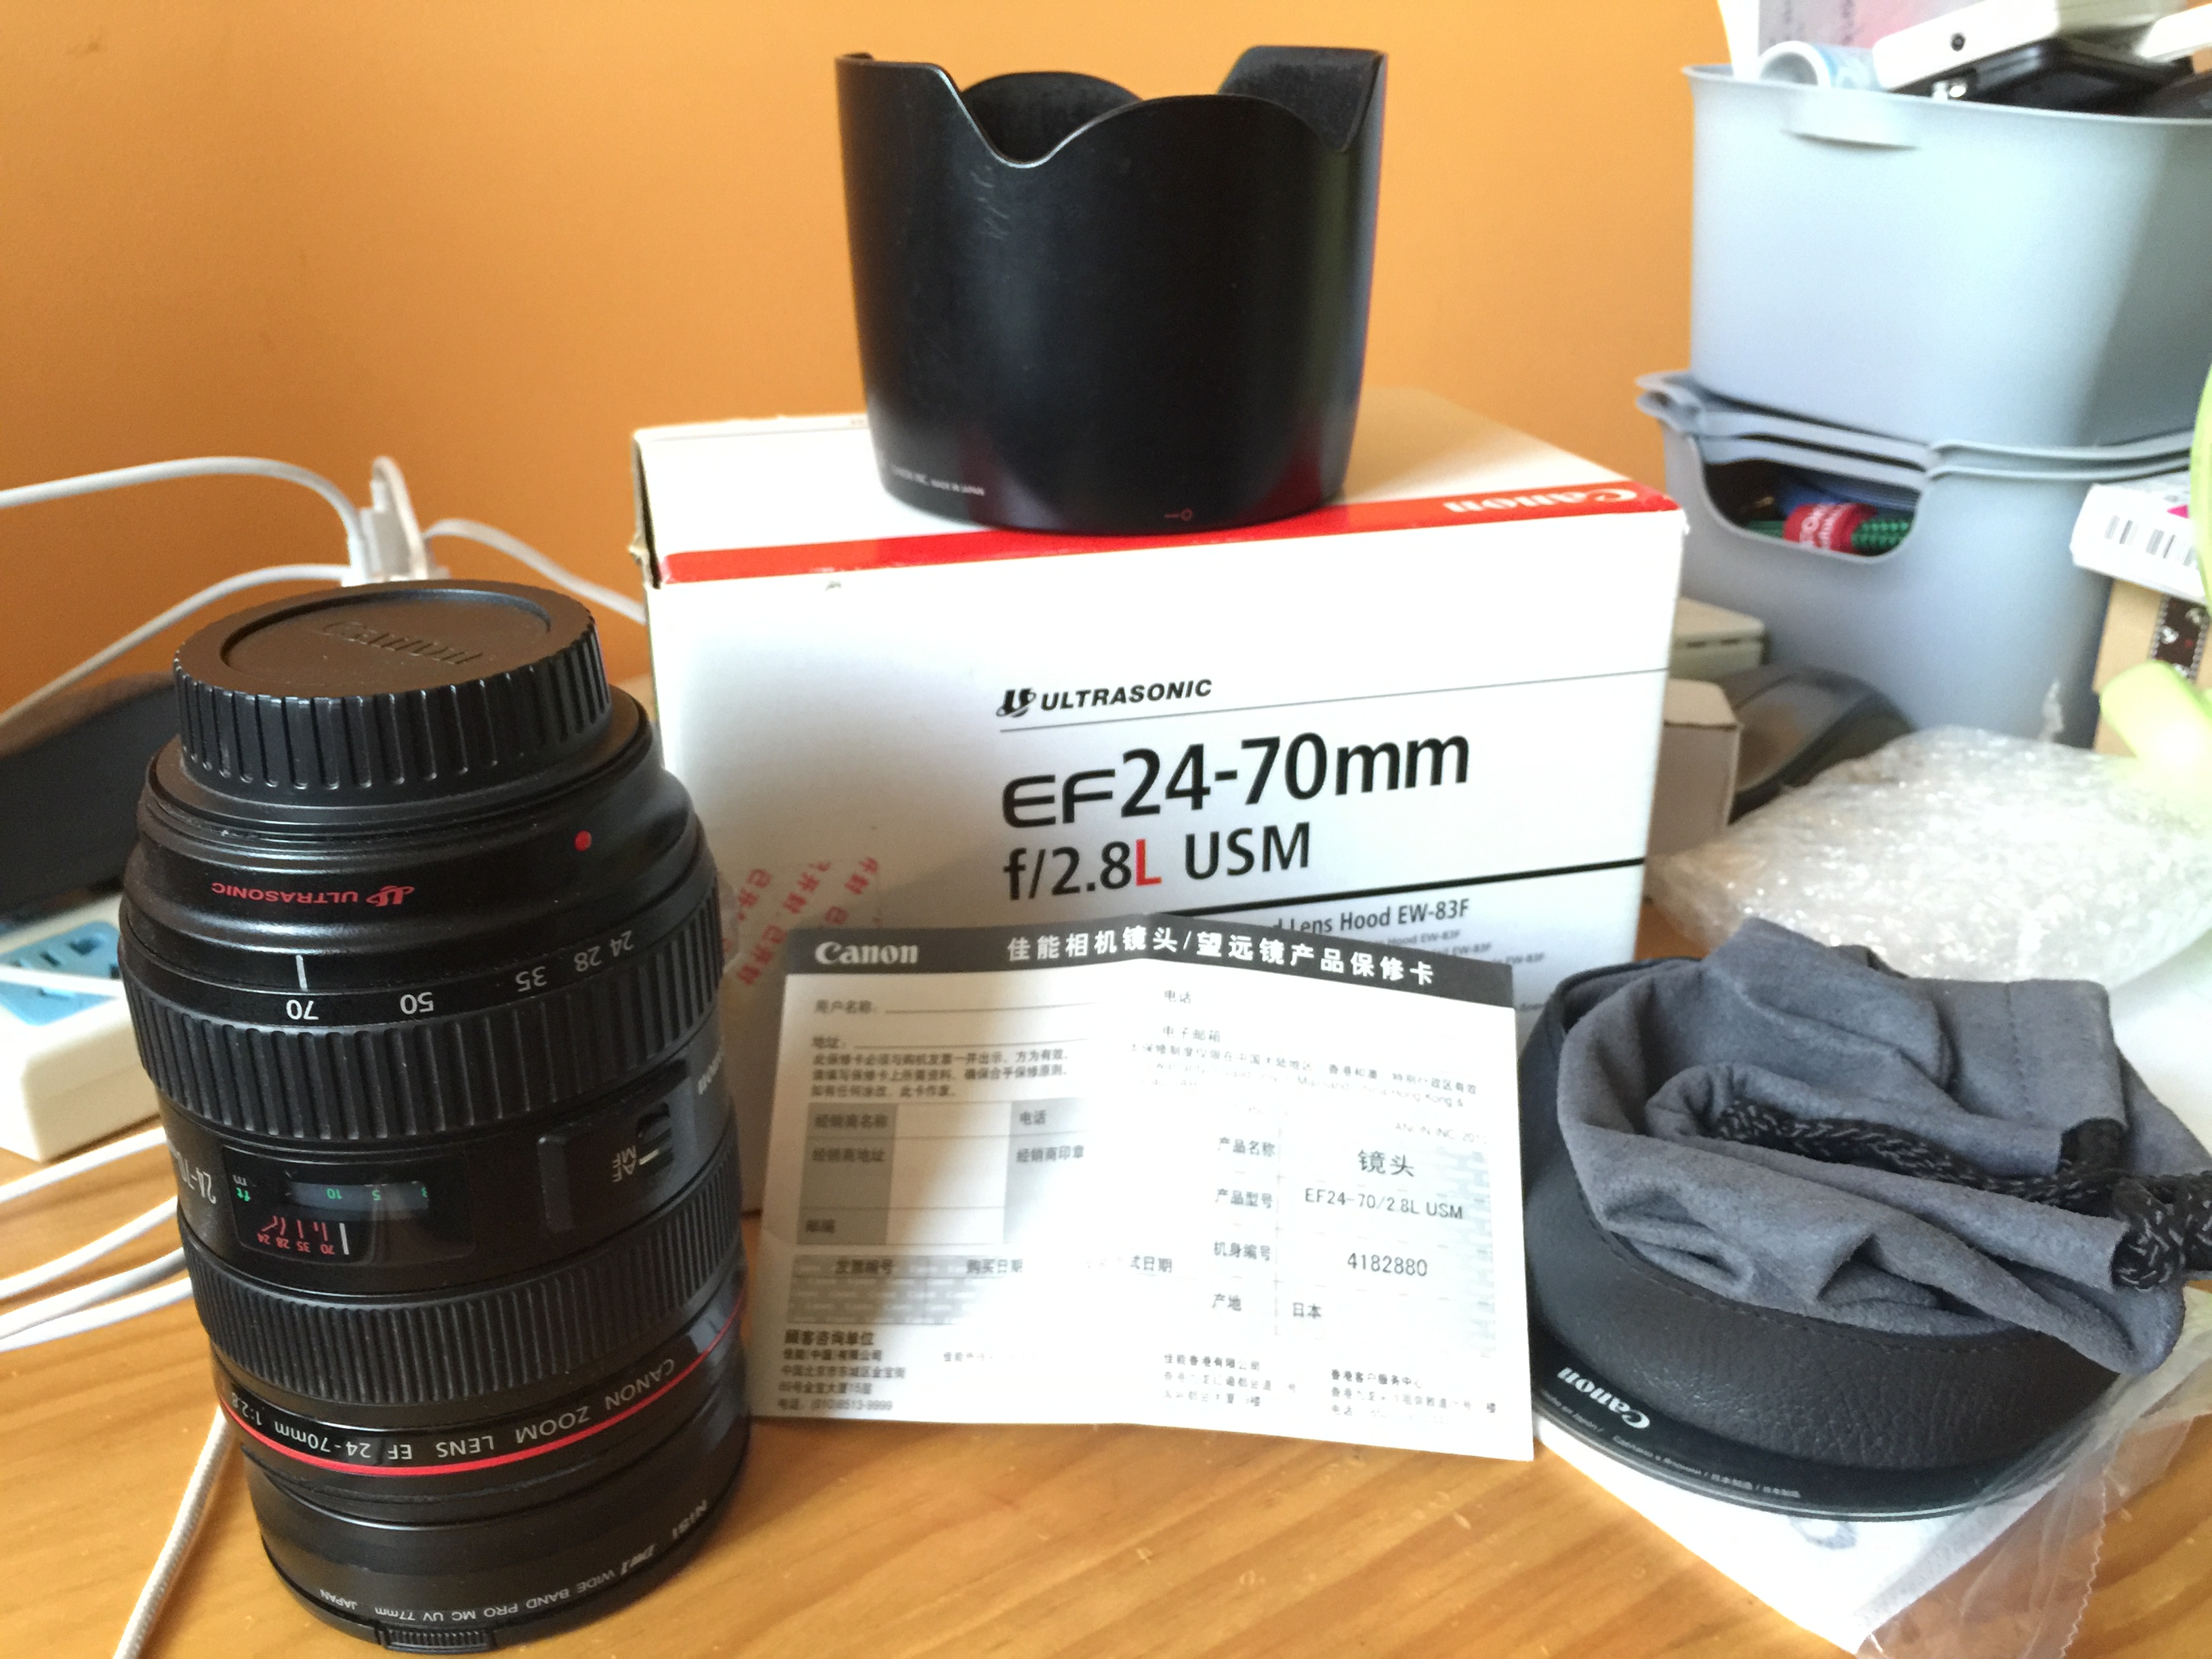  Canon EF 24-70mm f/2.8L USM